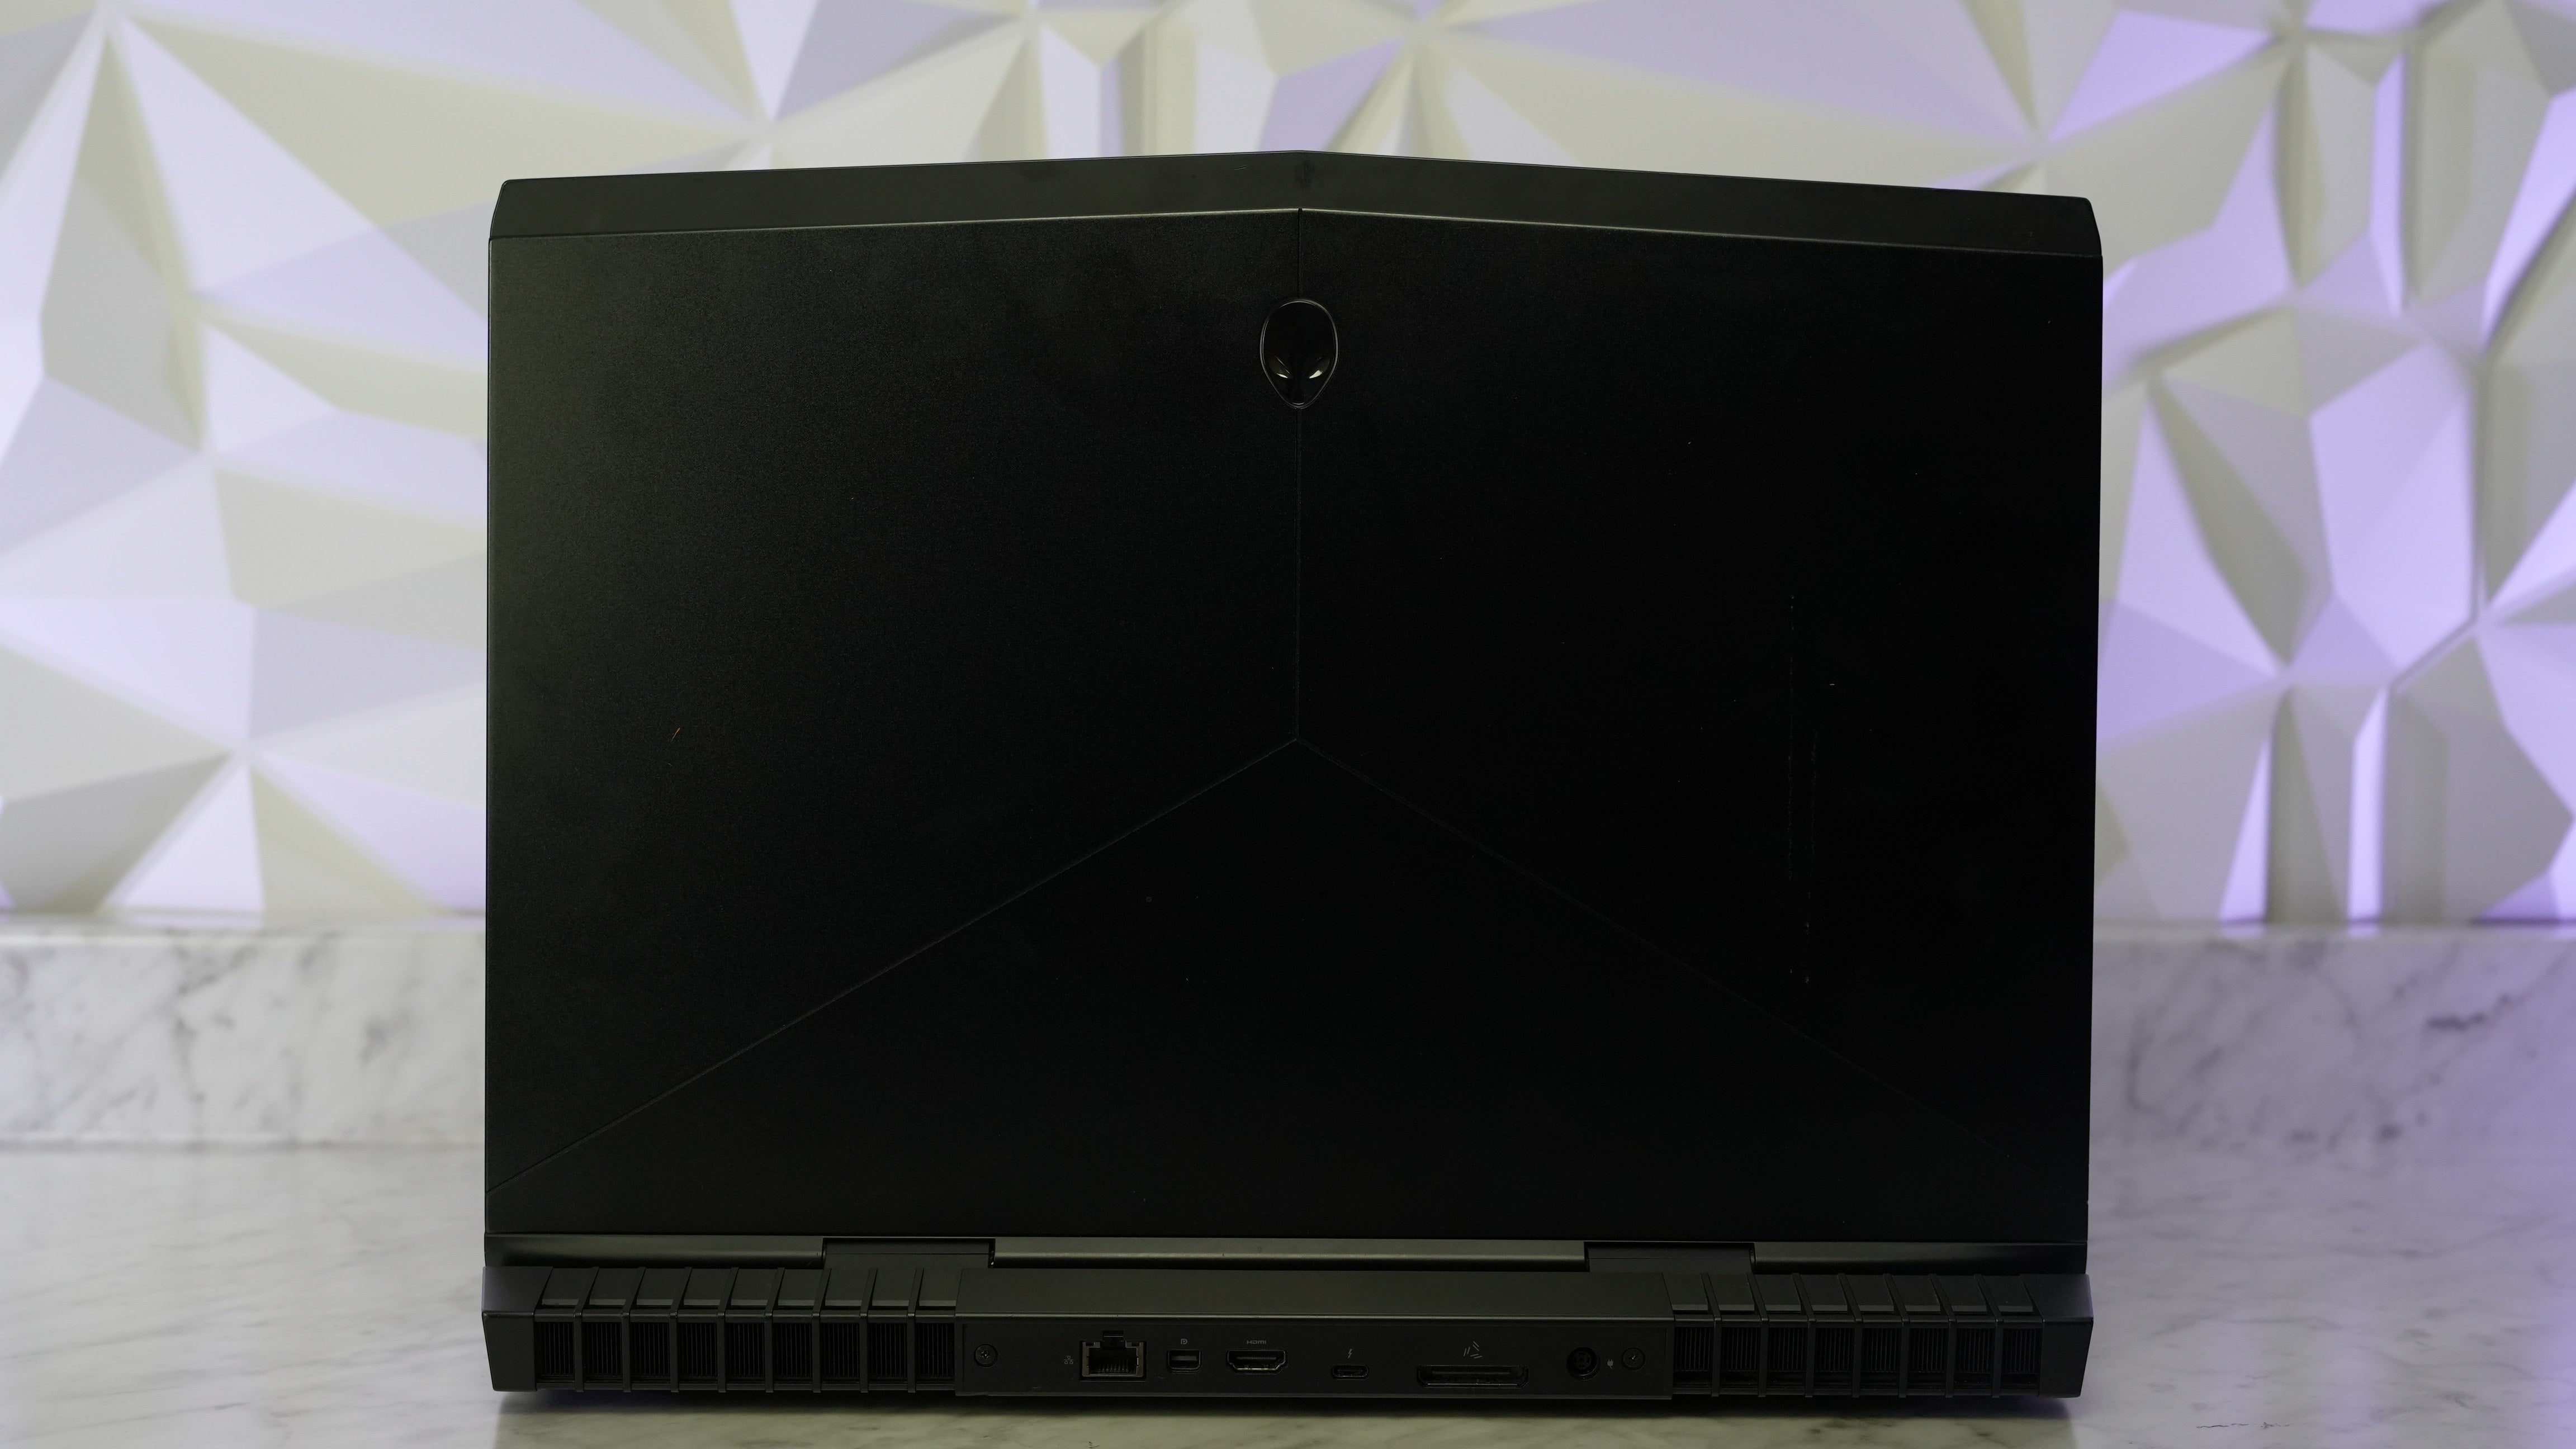 Alienware R4 17- Intel i7 8750H + GTX 1070 Gaming Laptop (In Stock)